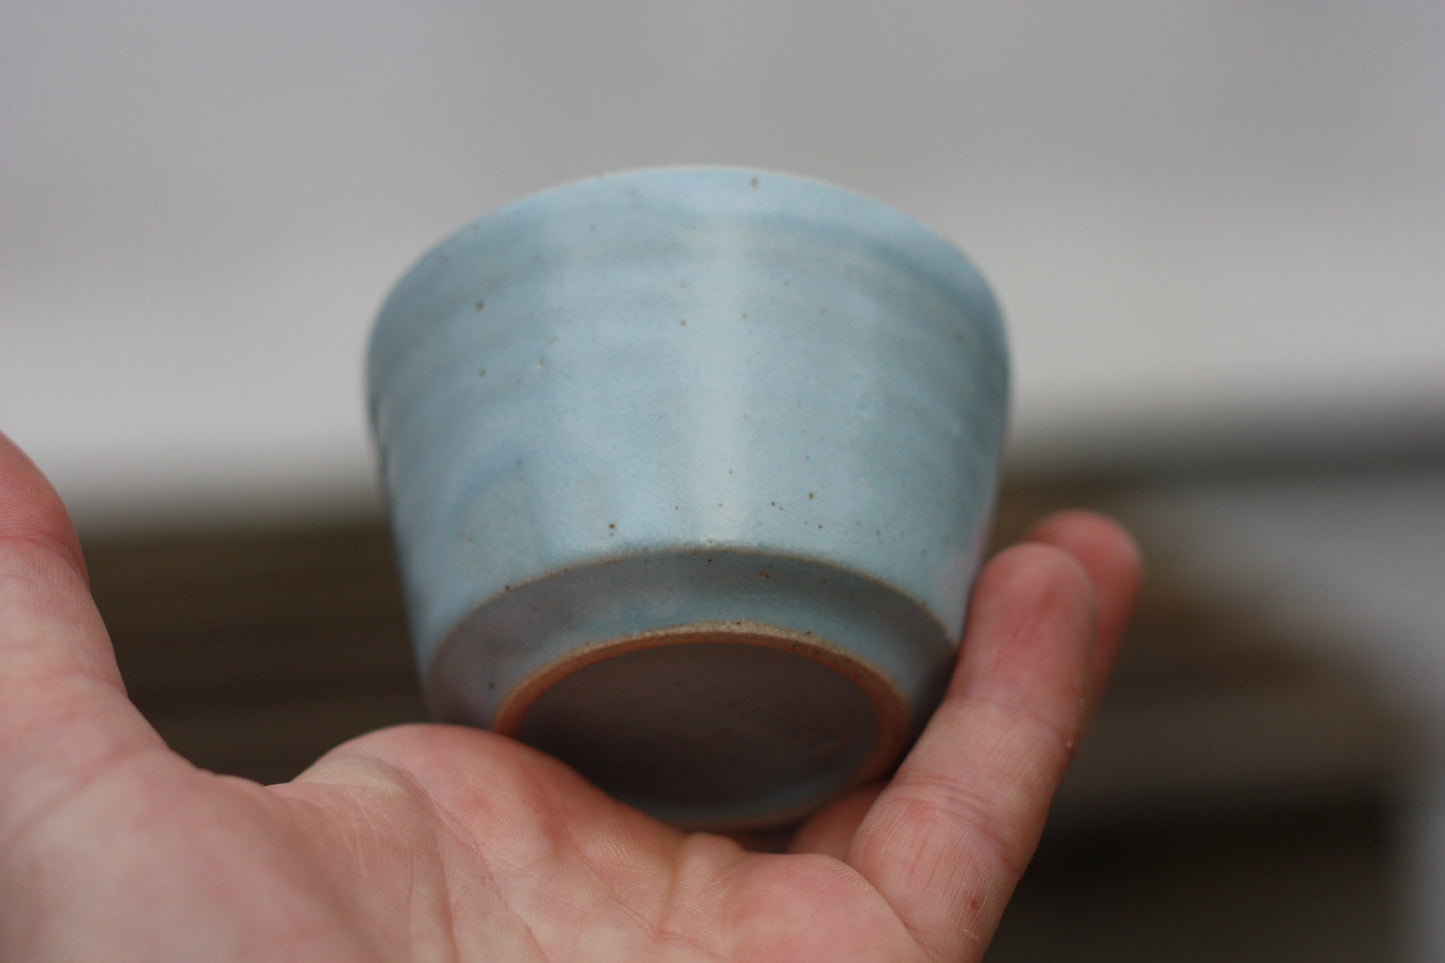 Small Pottery handmade stacking ceramic pots